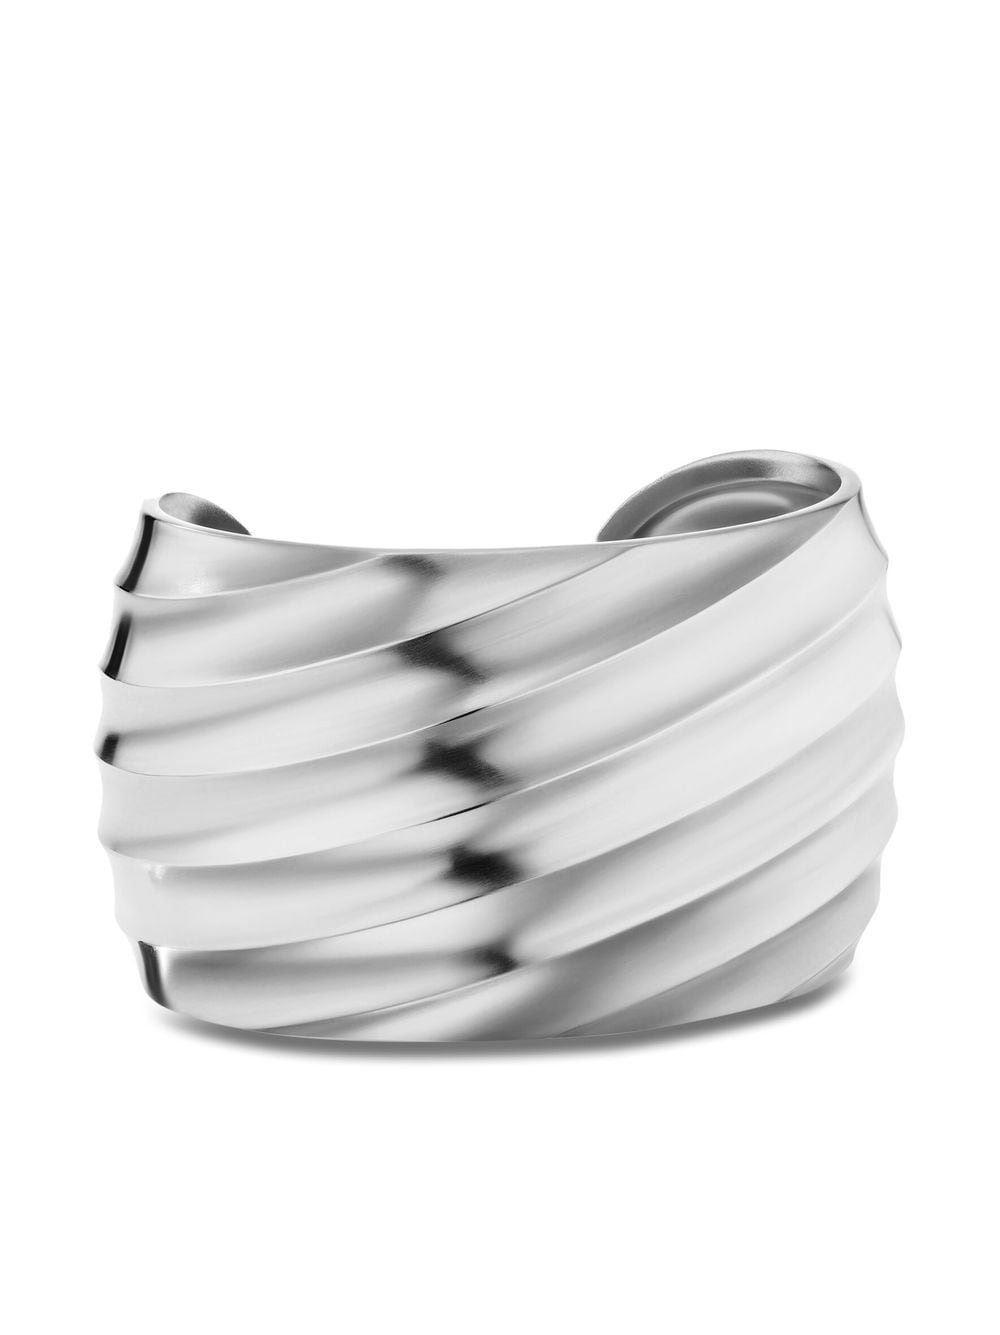 David Yurman 41mm Cable Edge cuff bracelet - Silver von David Yurman